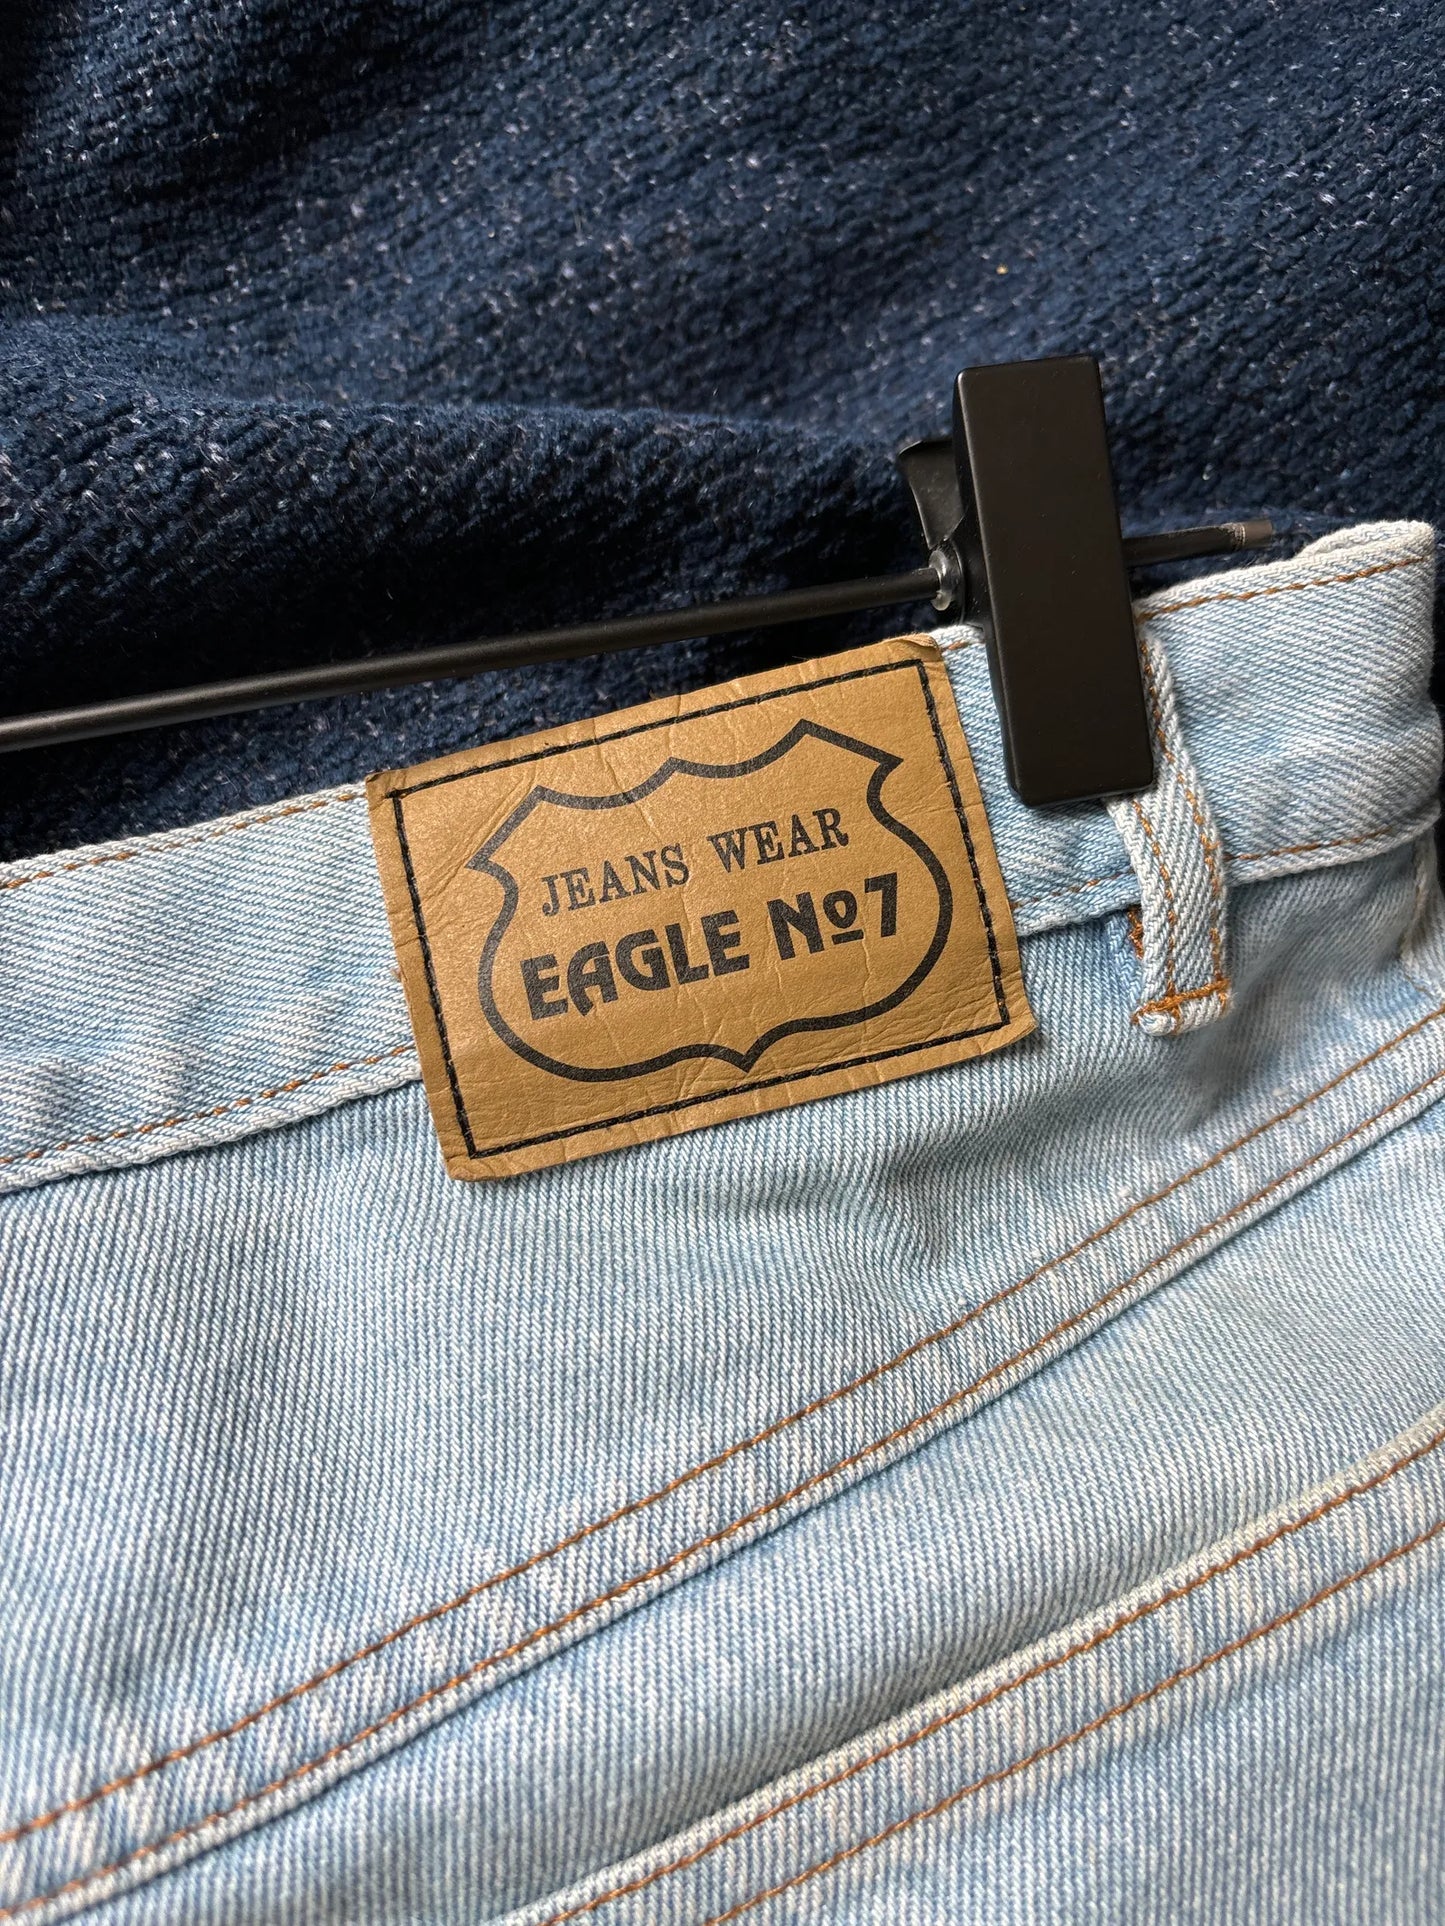 Jeans Wear Eagle No. 7-shorts